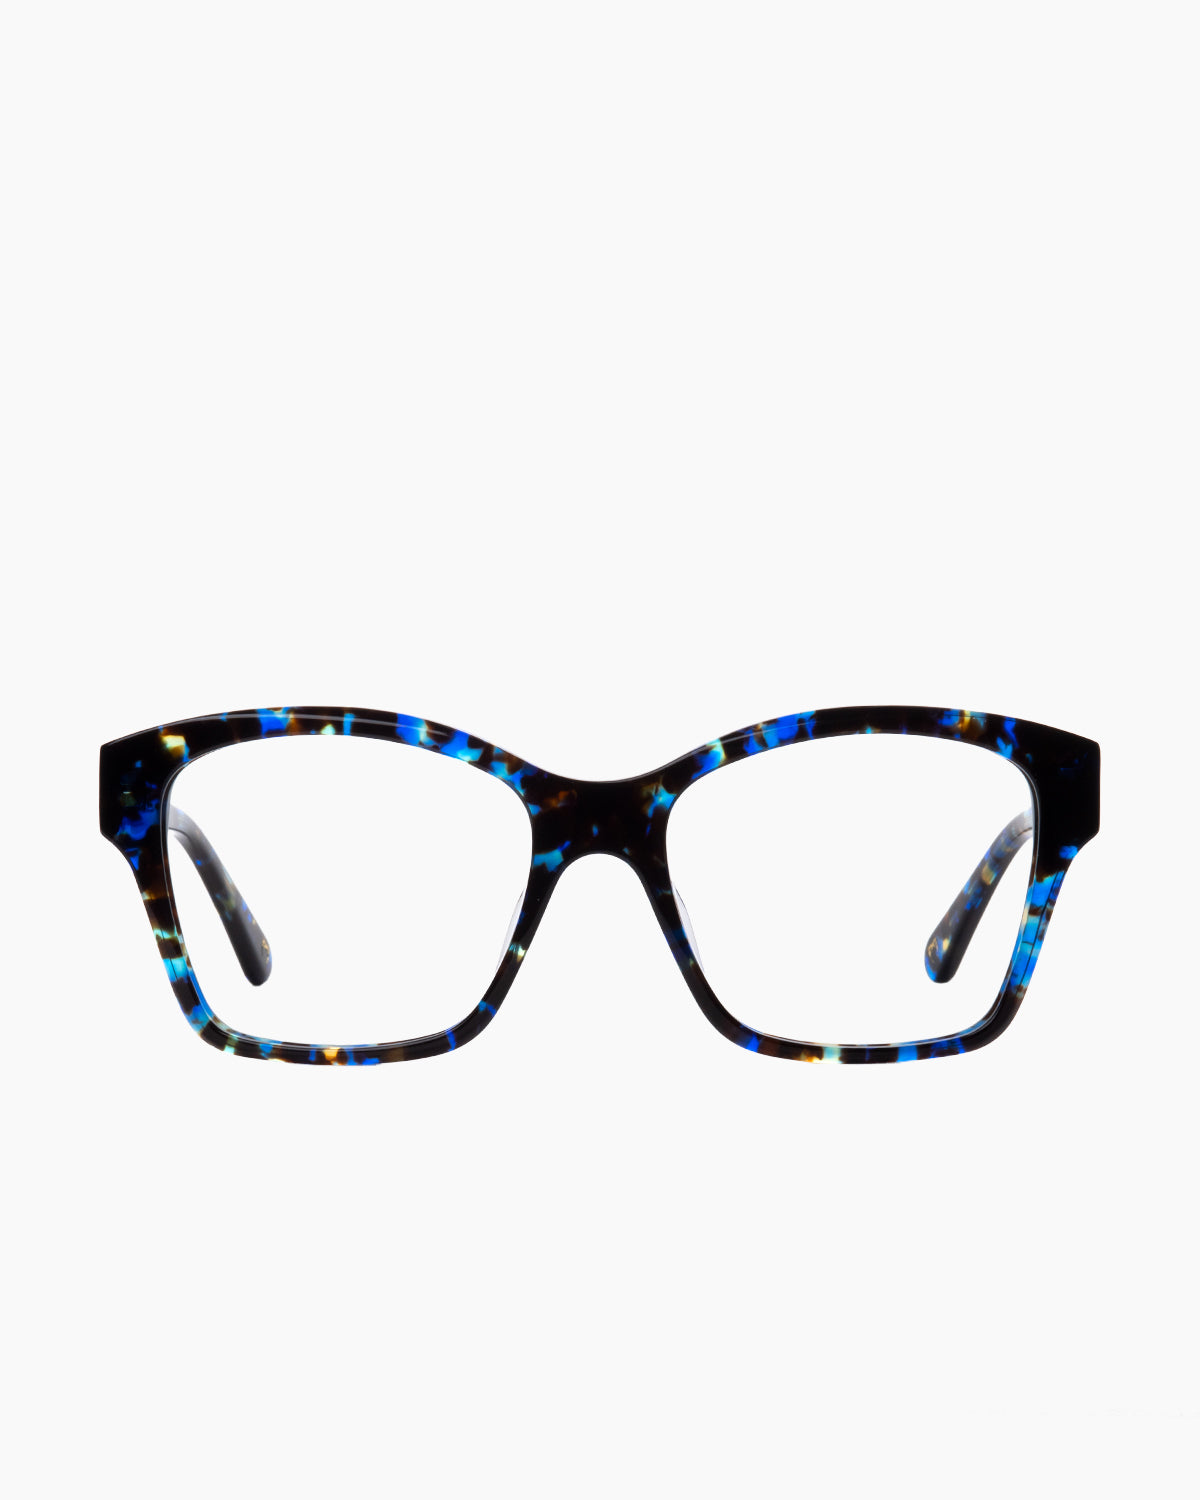 Spectacleeyeworks - Riley - c716 | Bar à lunettes